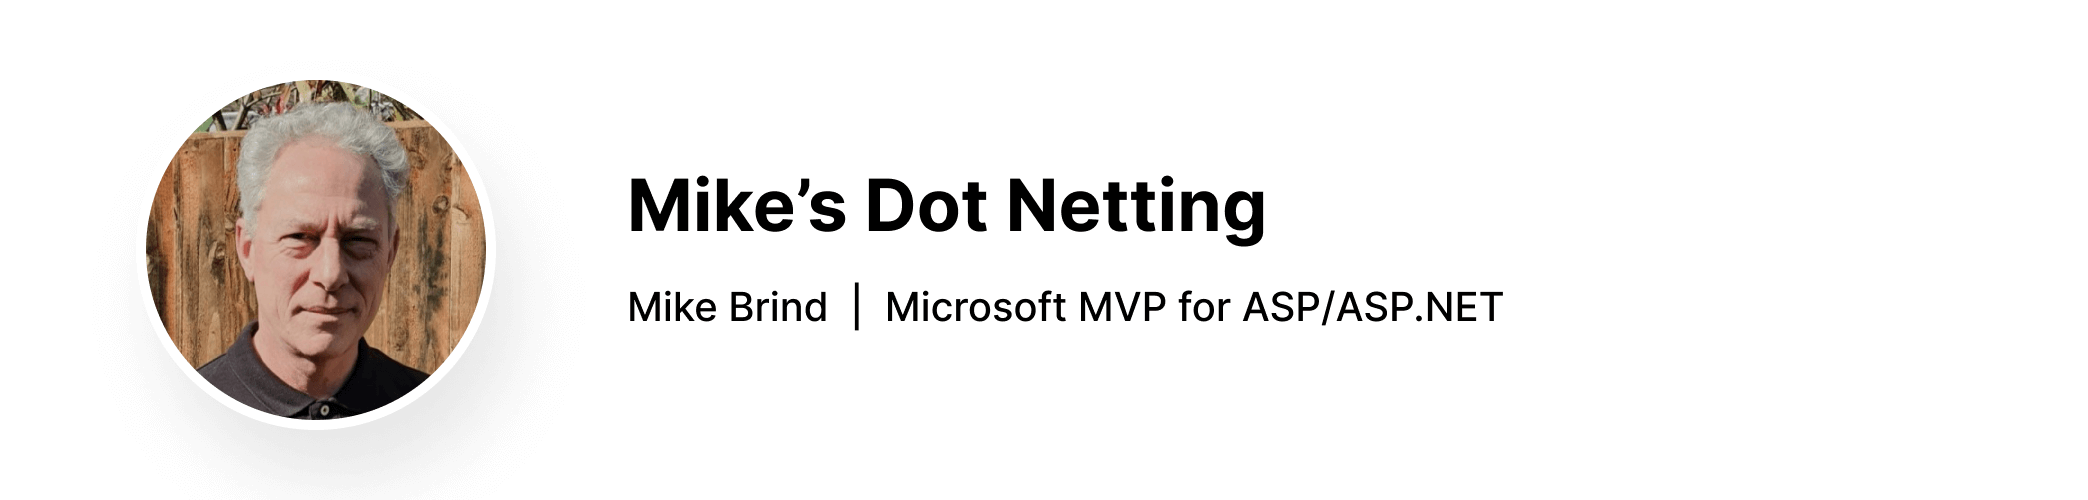 The Business Side of .NET Development - Profile 1